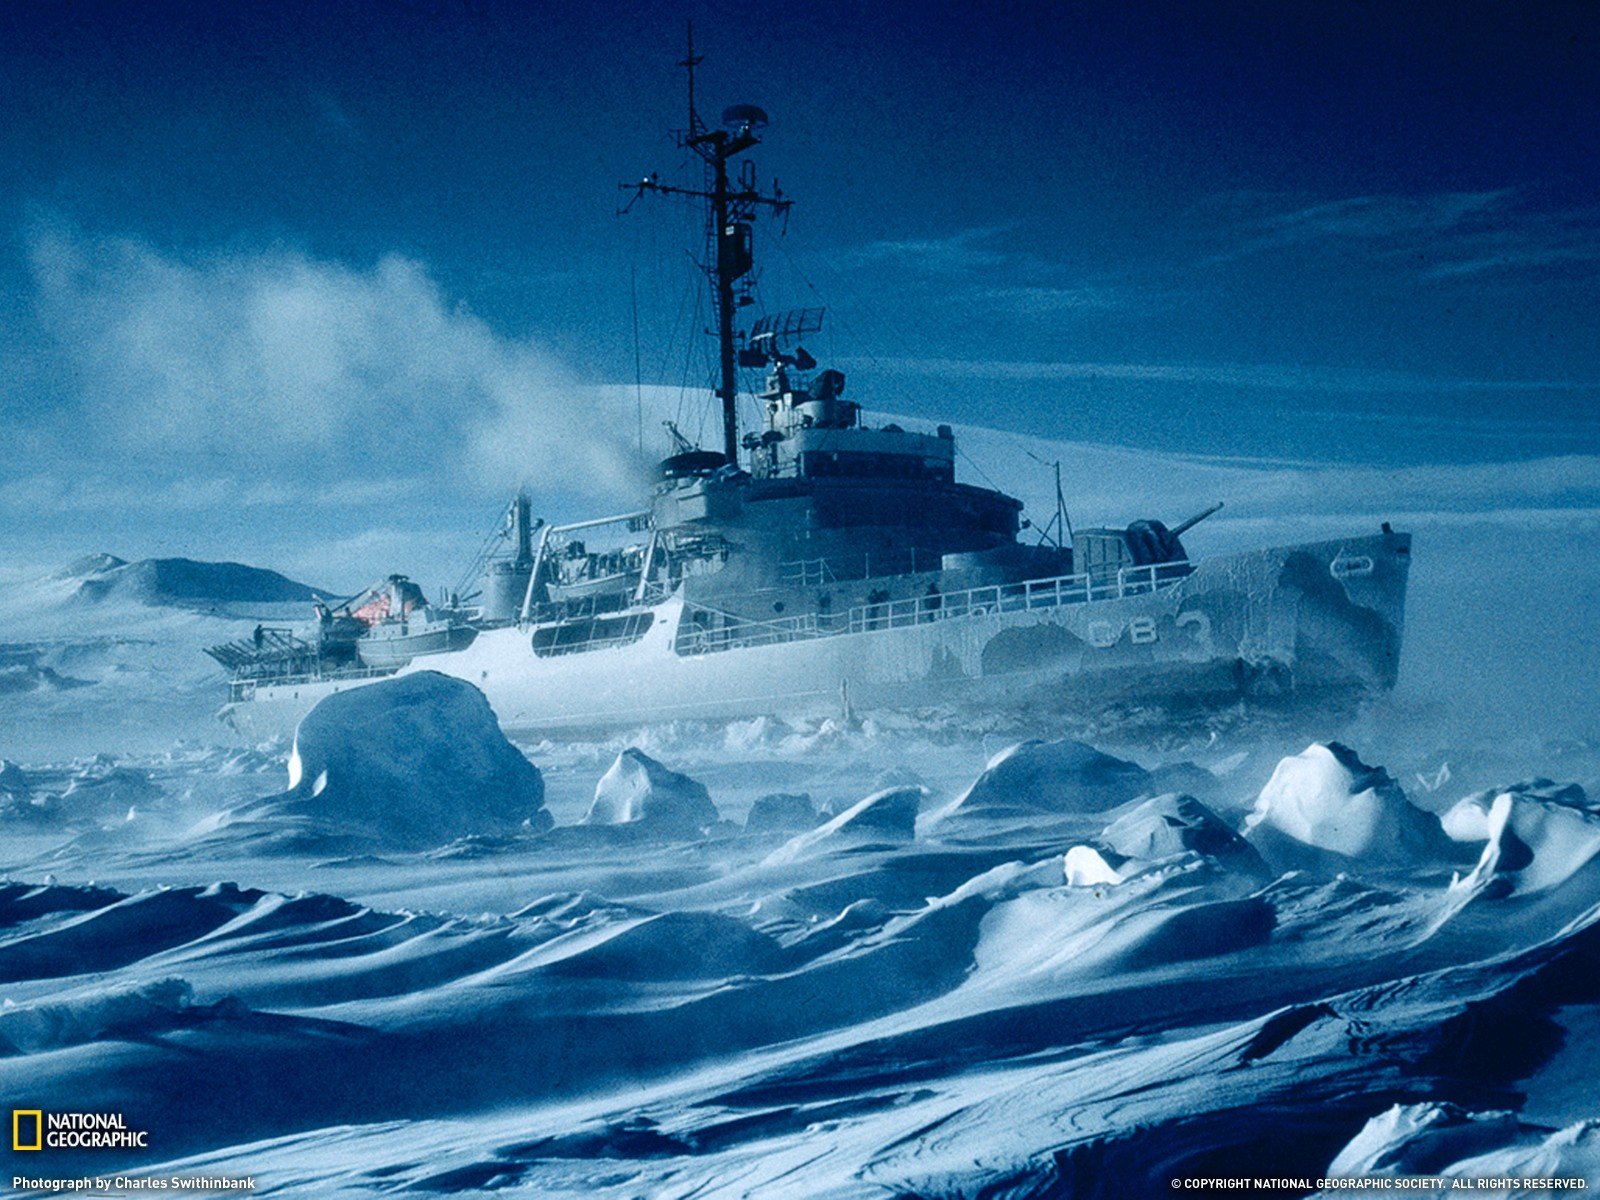 Ice nature ships National Geographic Antarctica icebreaker ships wallpaperx1200